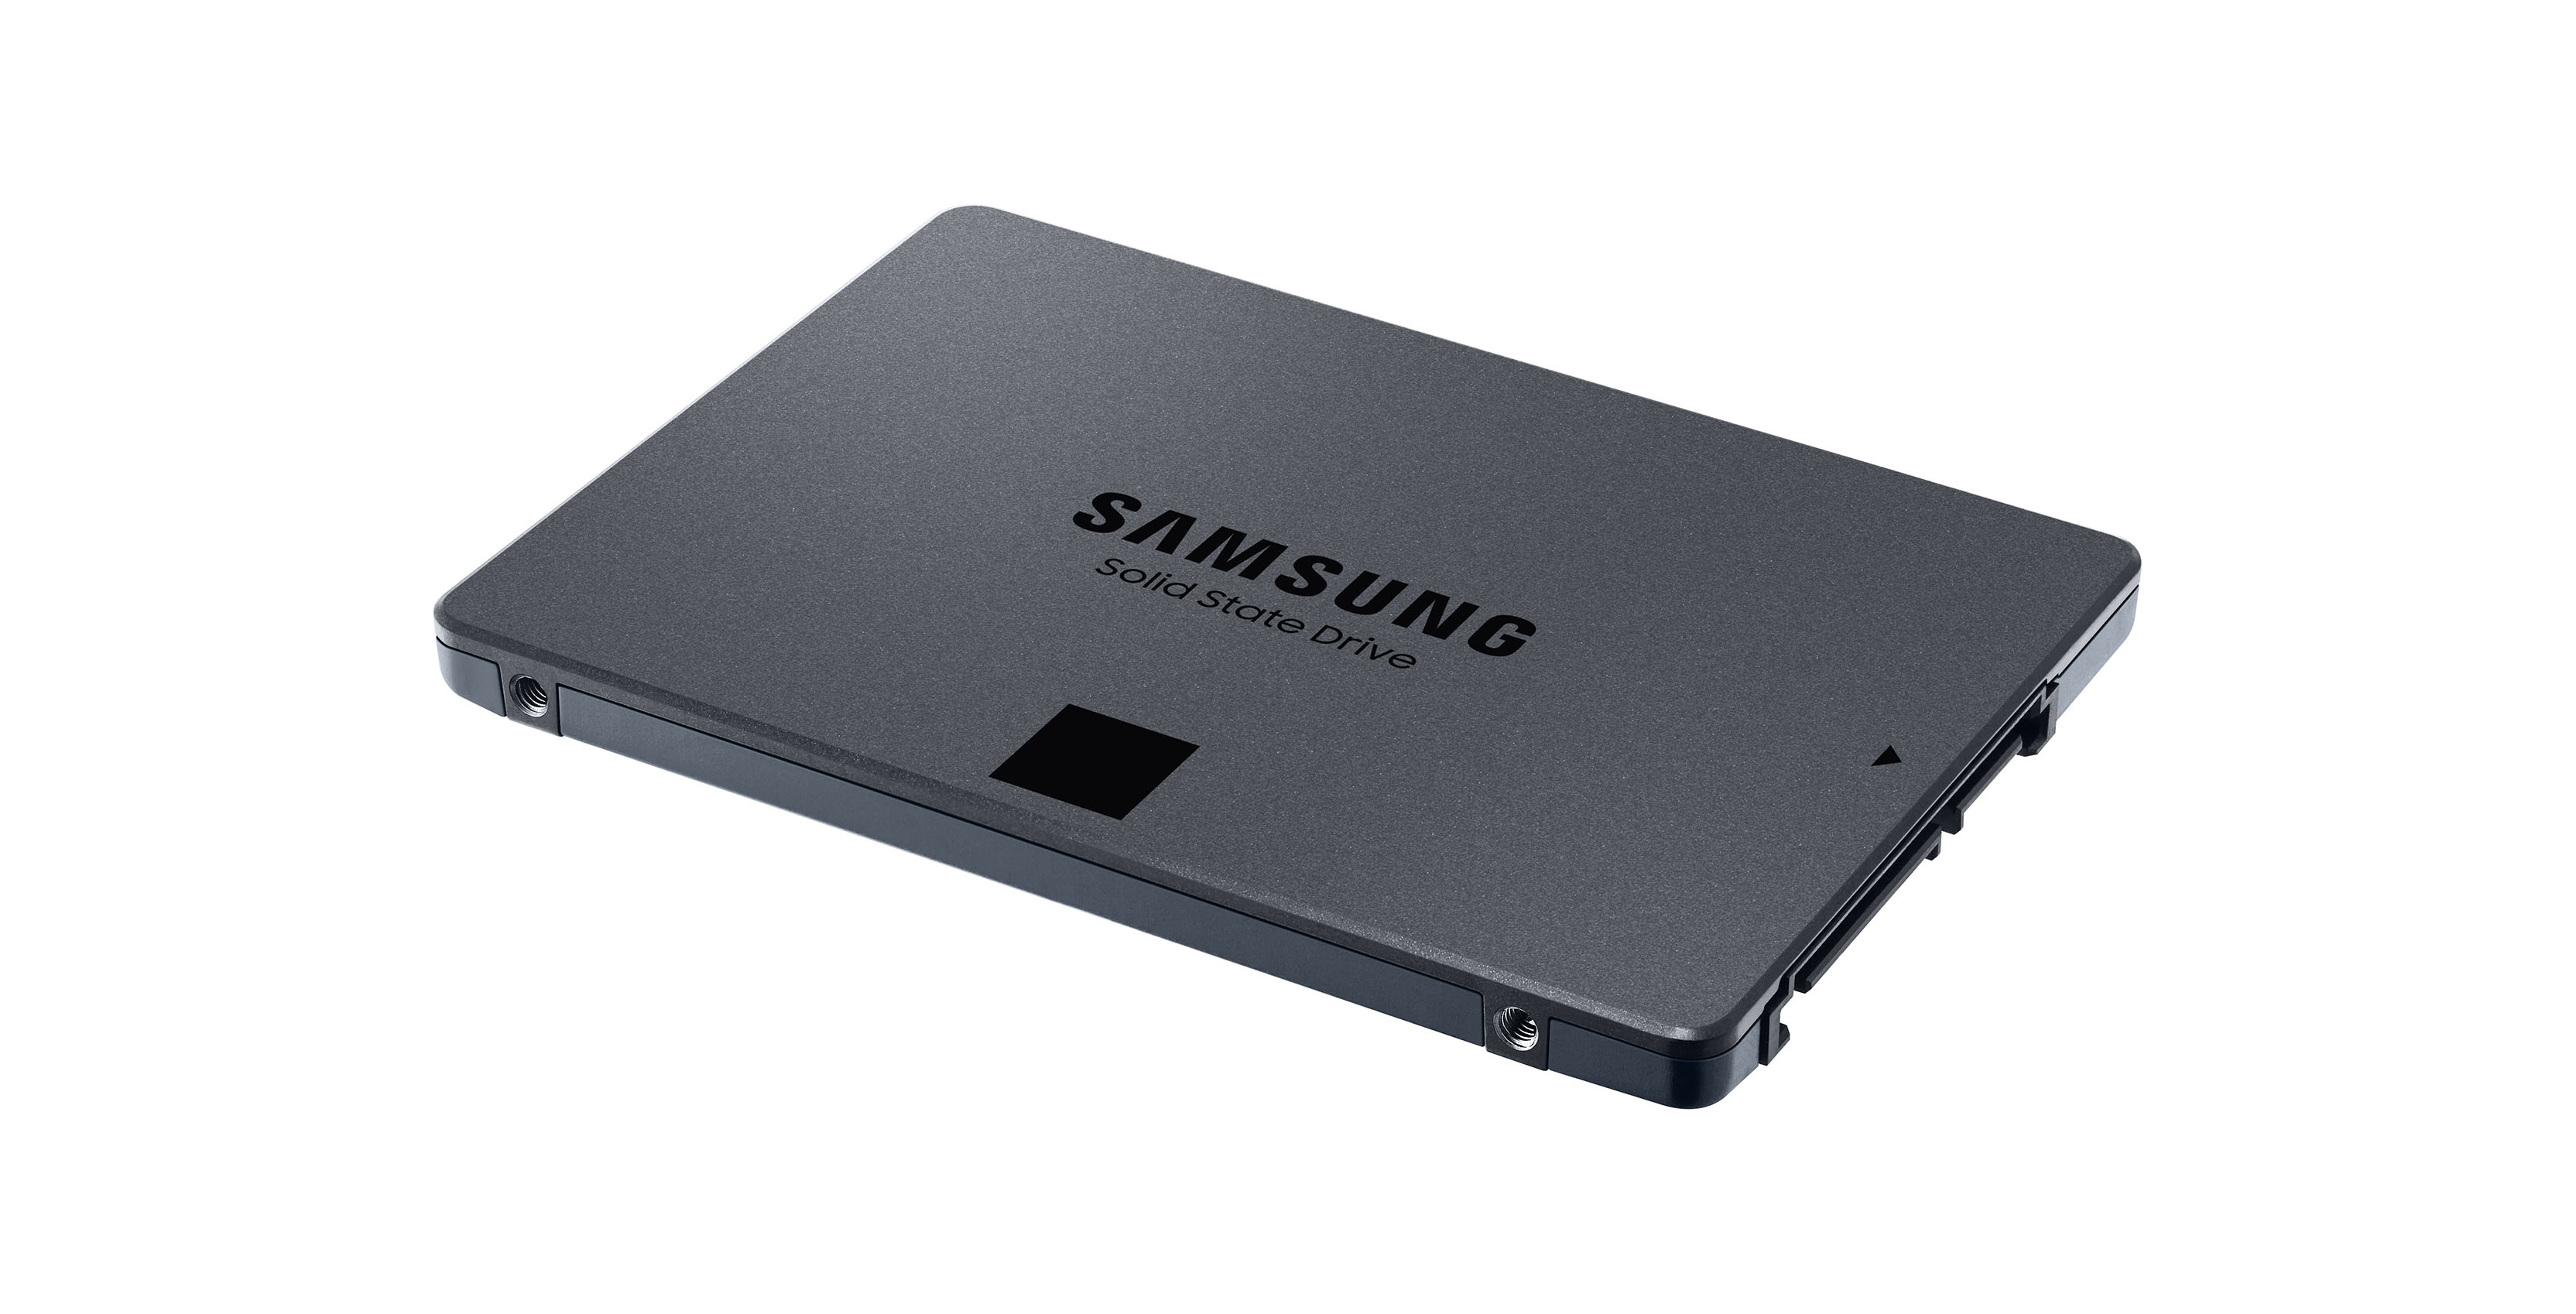 Samsung unveils 860 QVO 4-bit MLC SATA SSDs